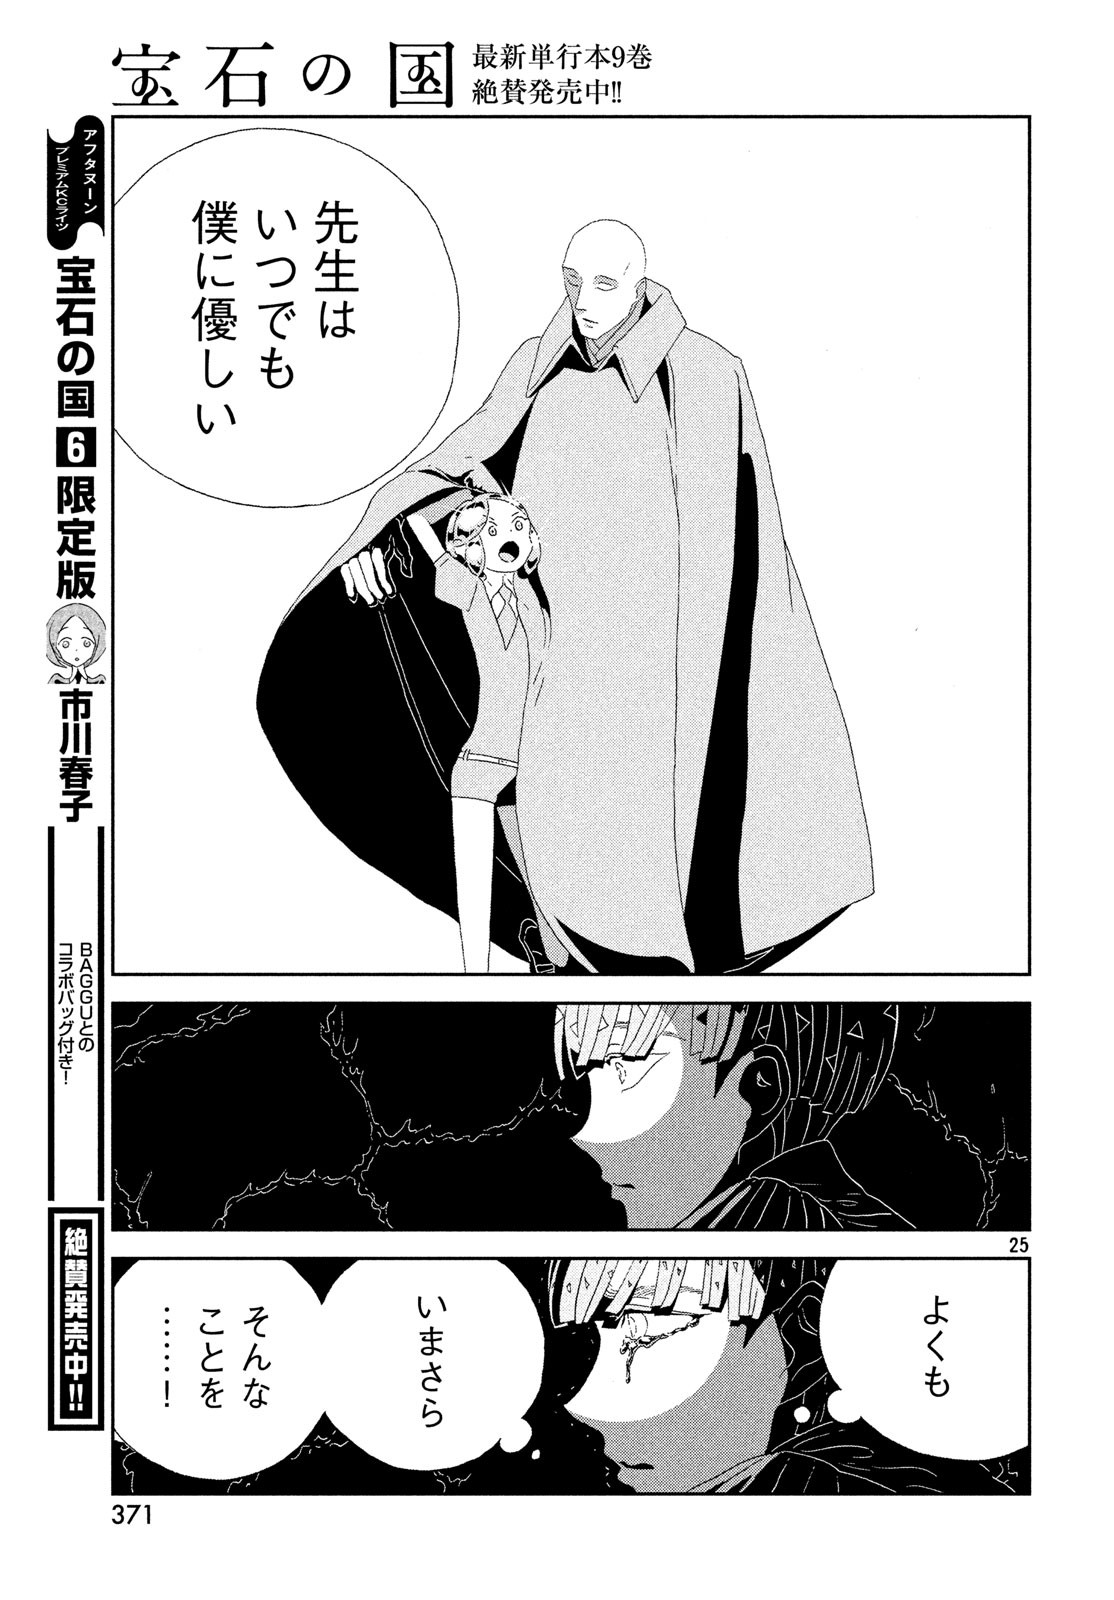 Houseki no Kuni - Chapter 76 - Page 25